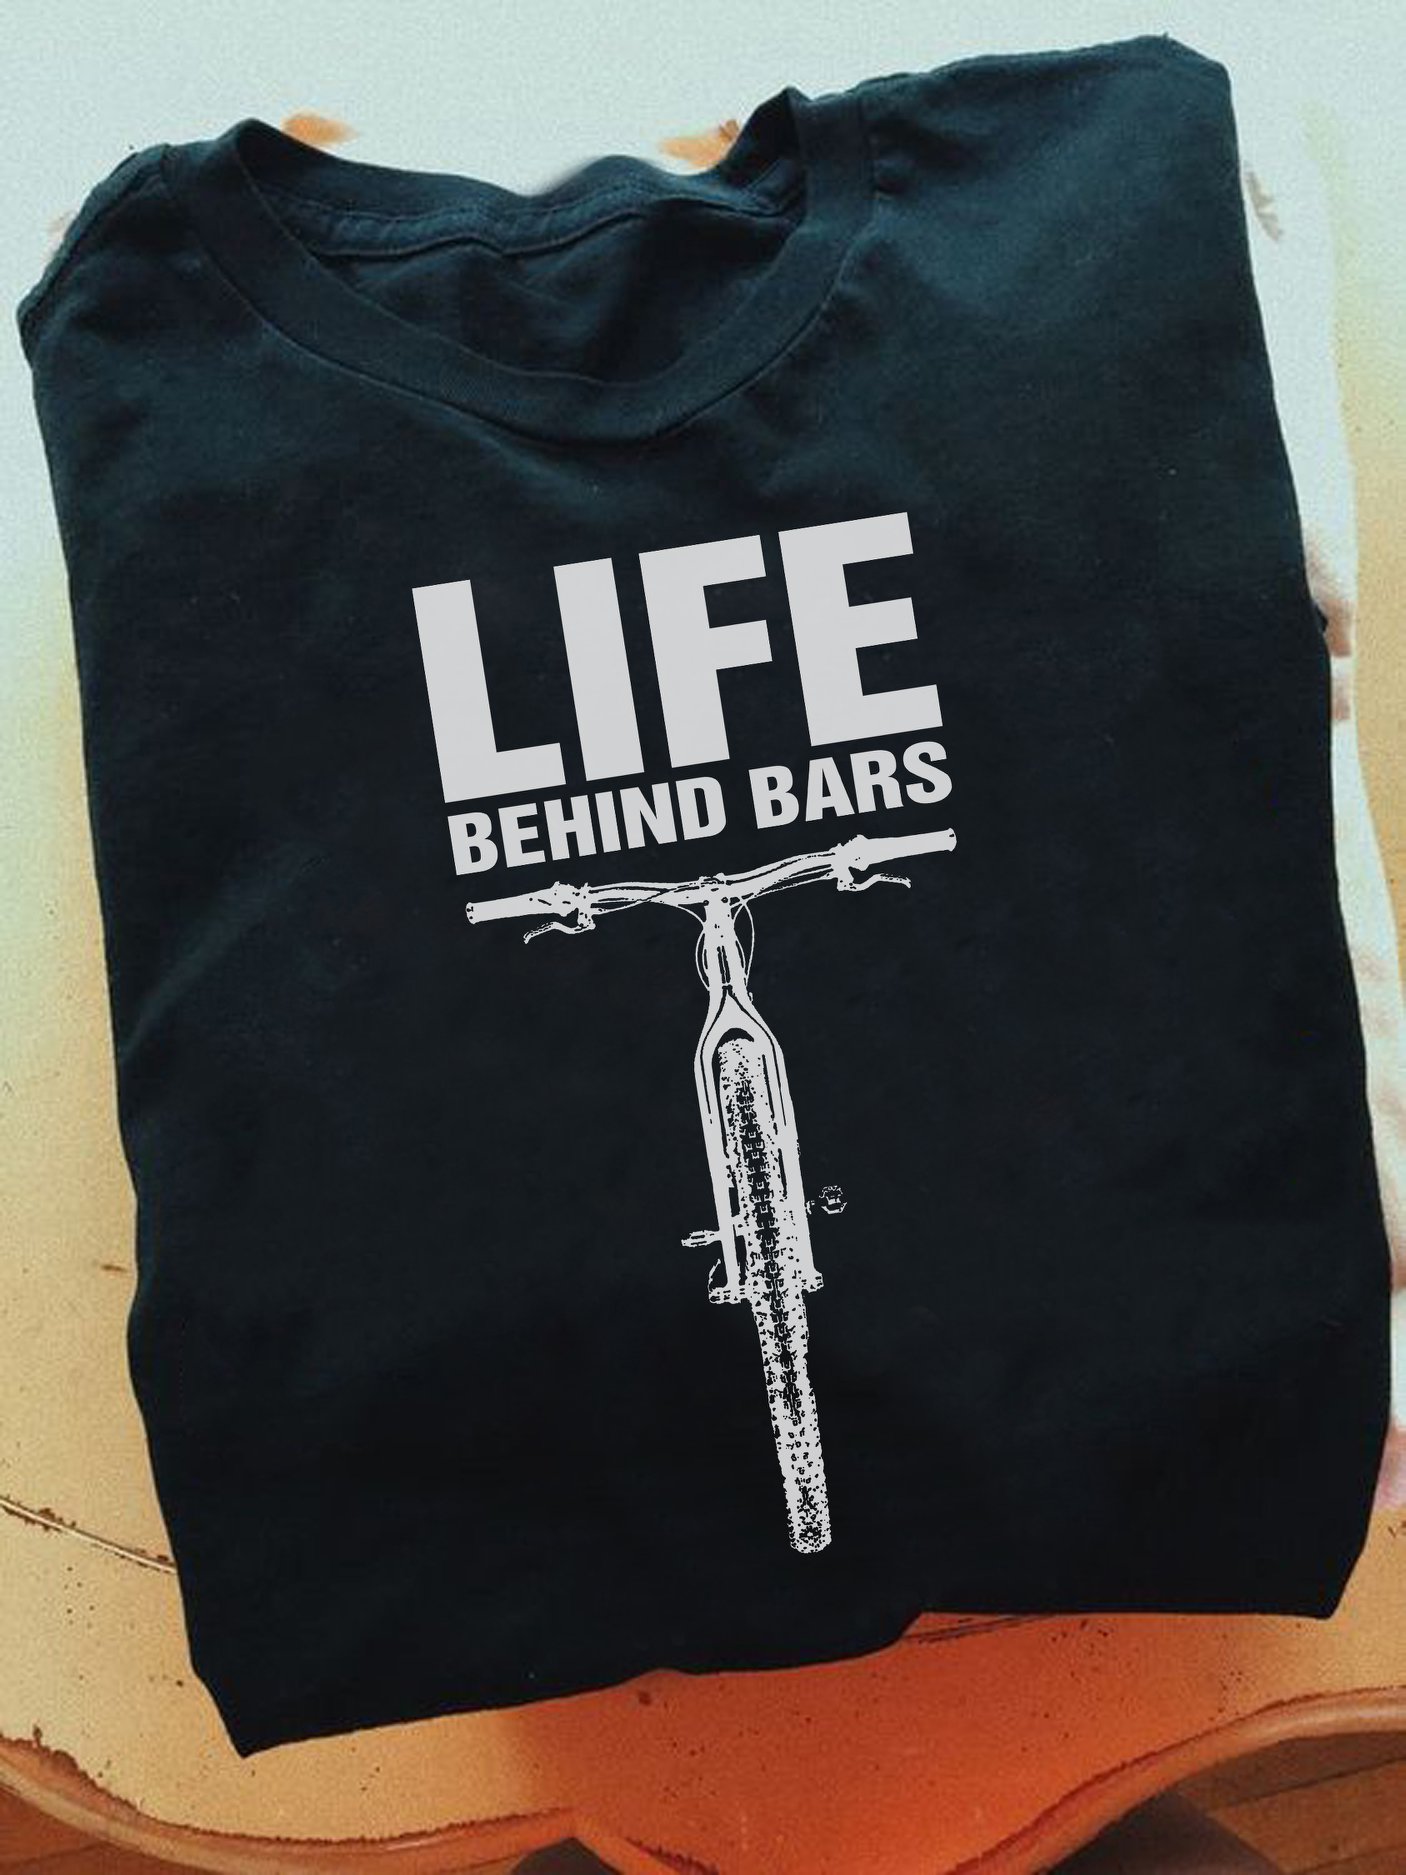 Life behind bars - Biker's life